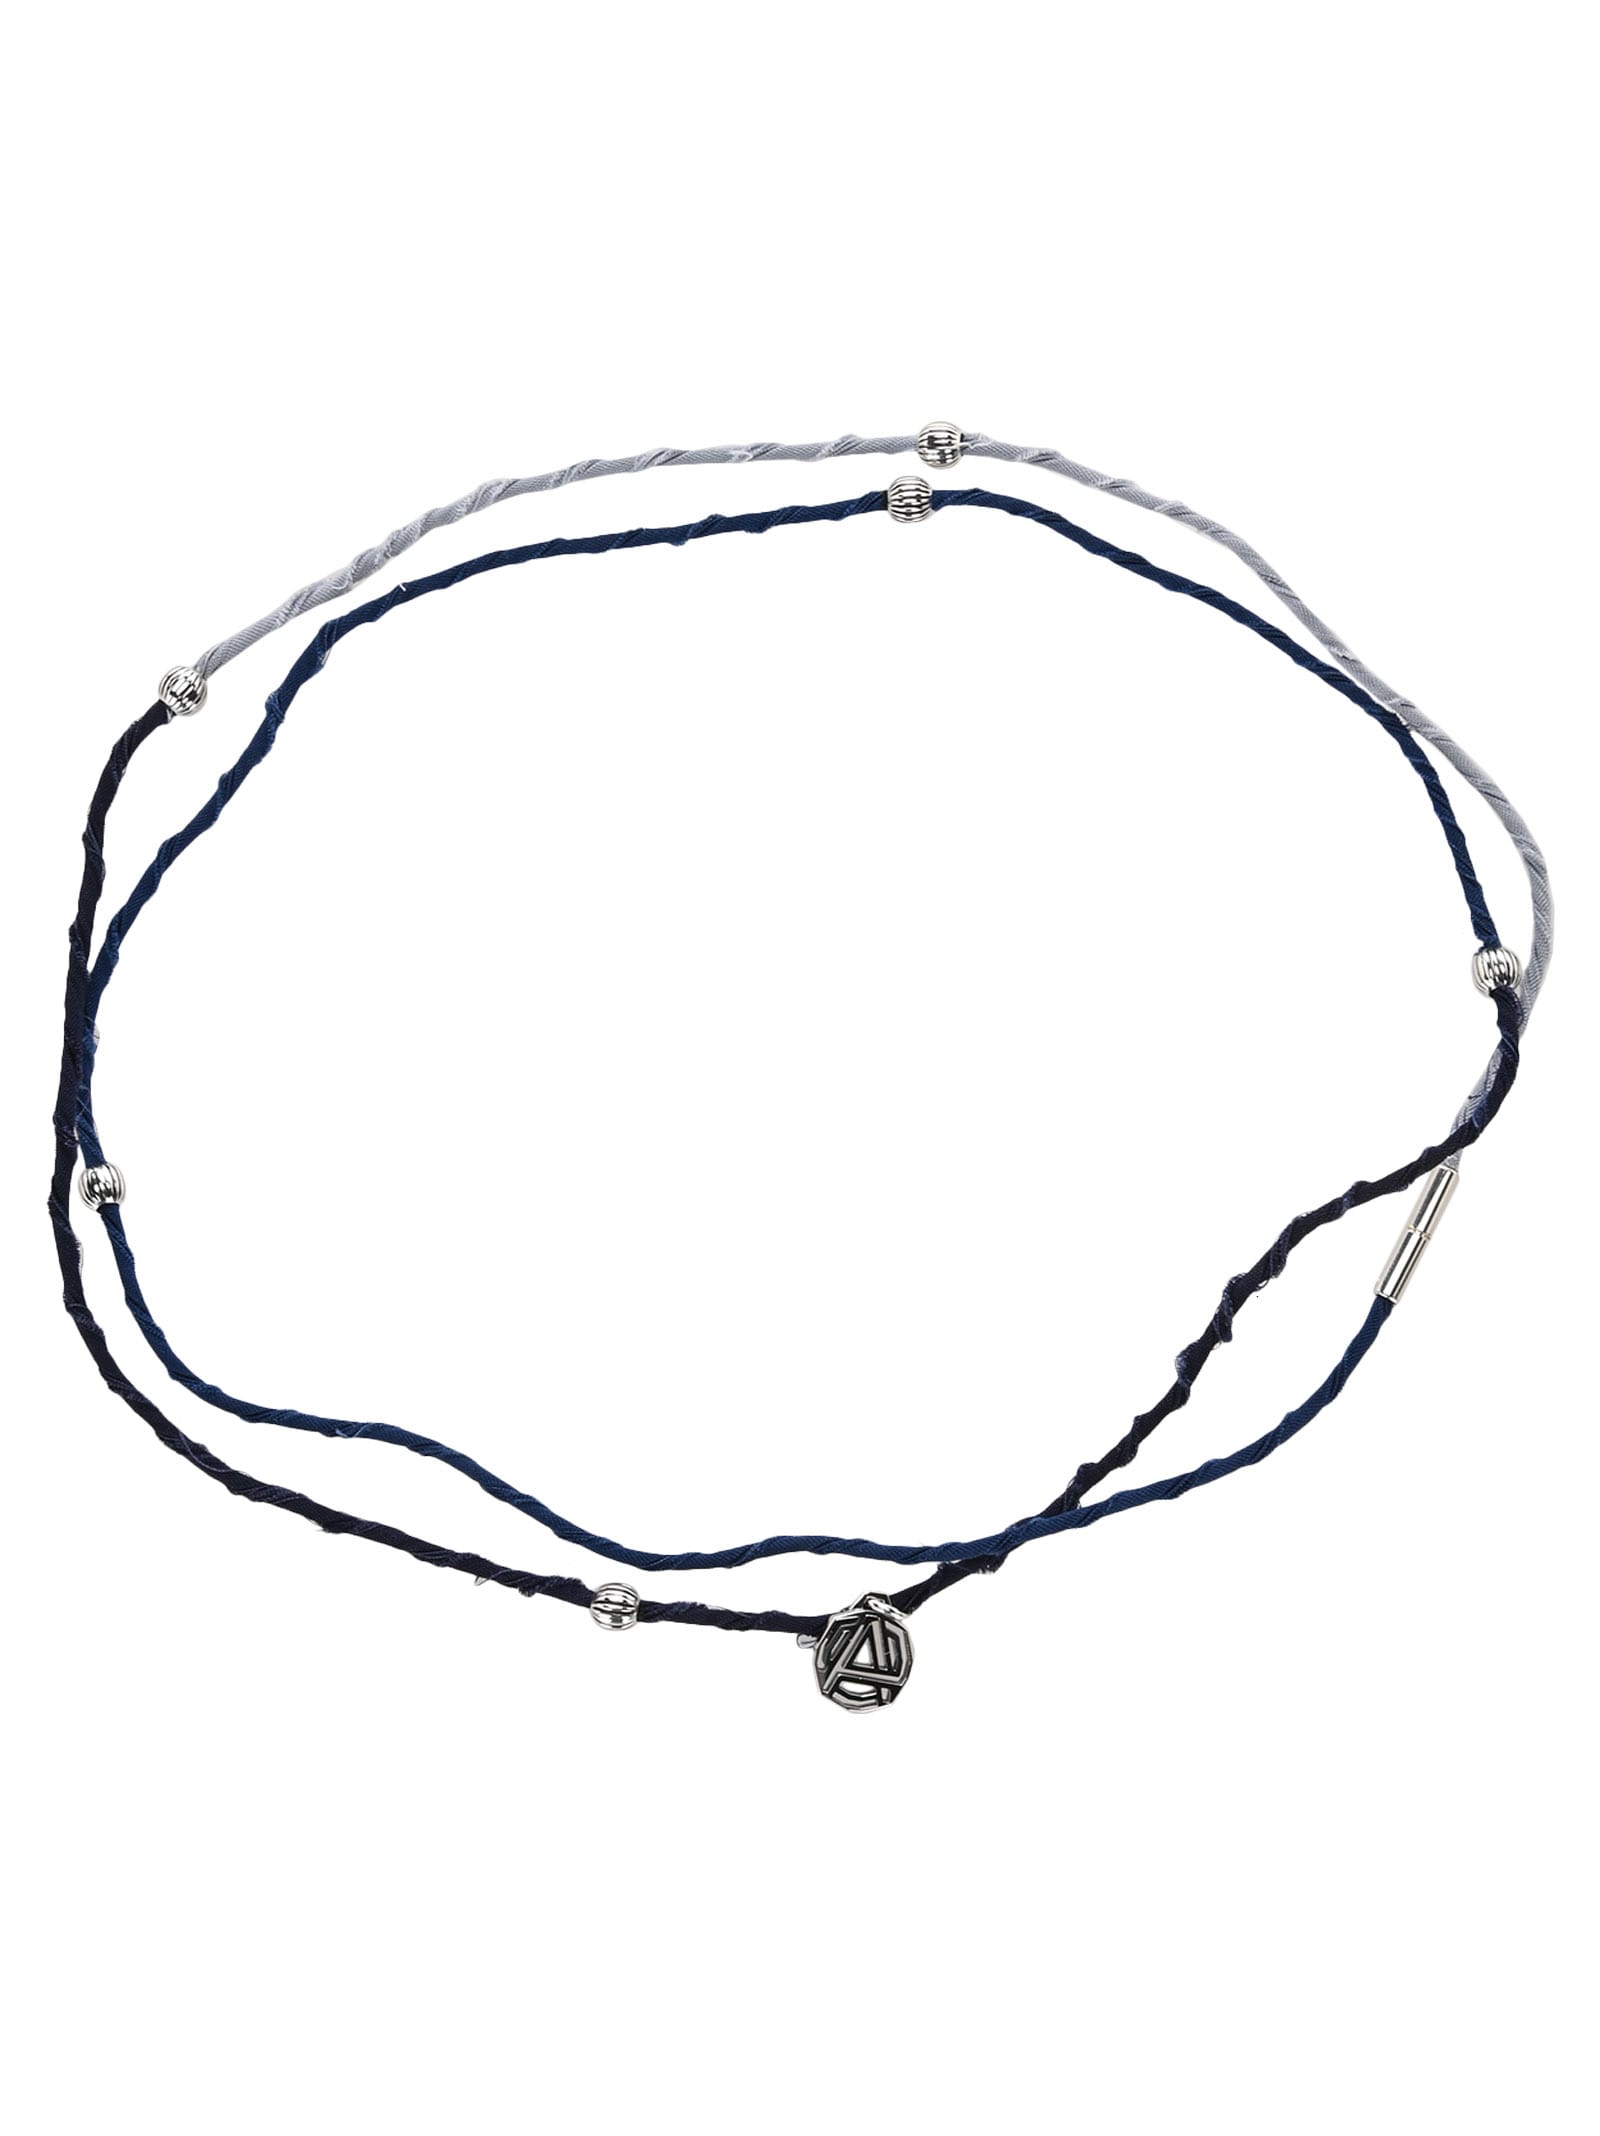 AMBUSH Emblem Charm Braided Necklace